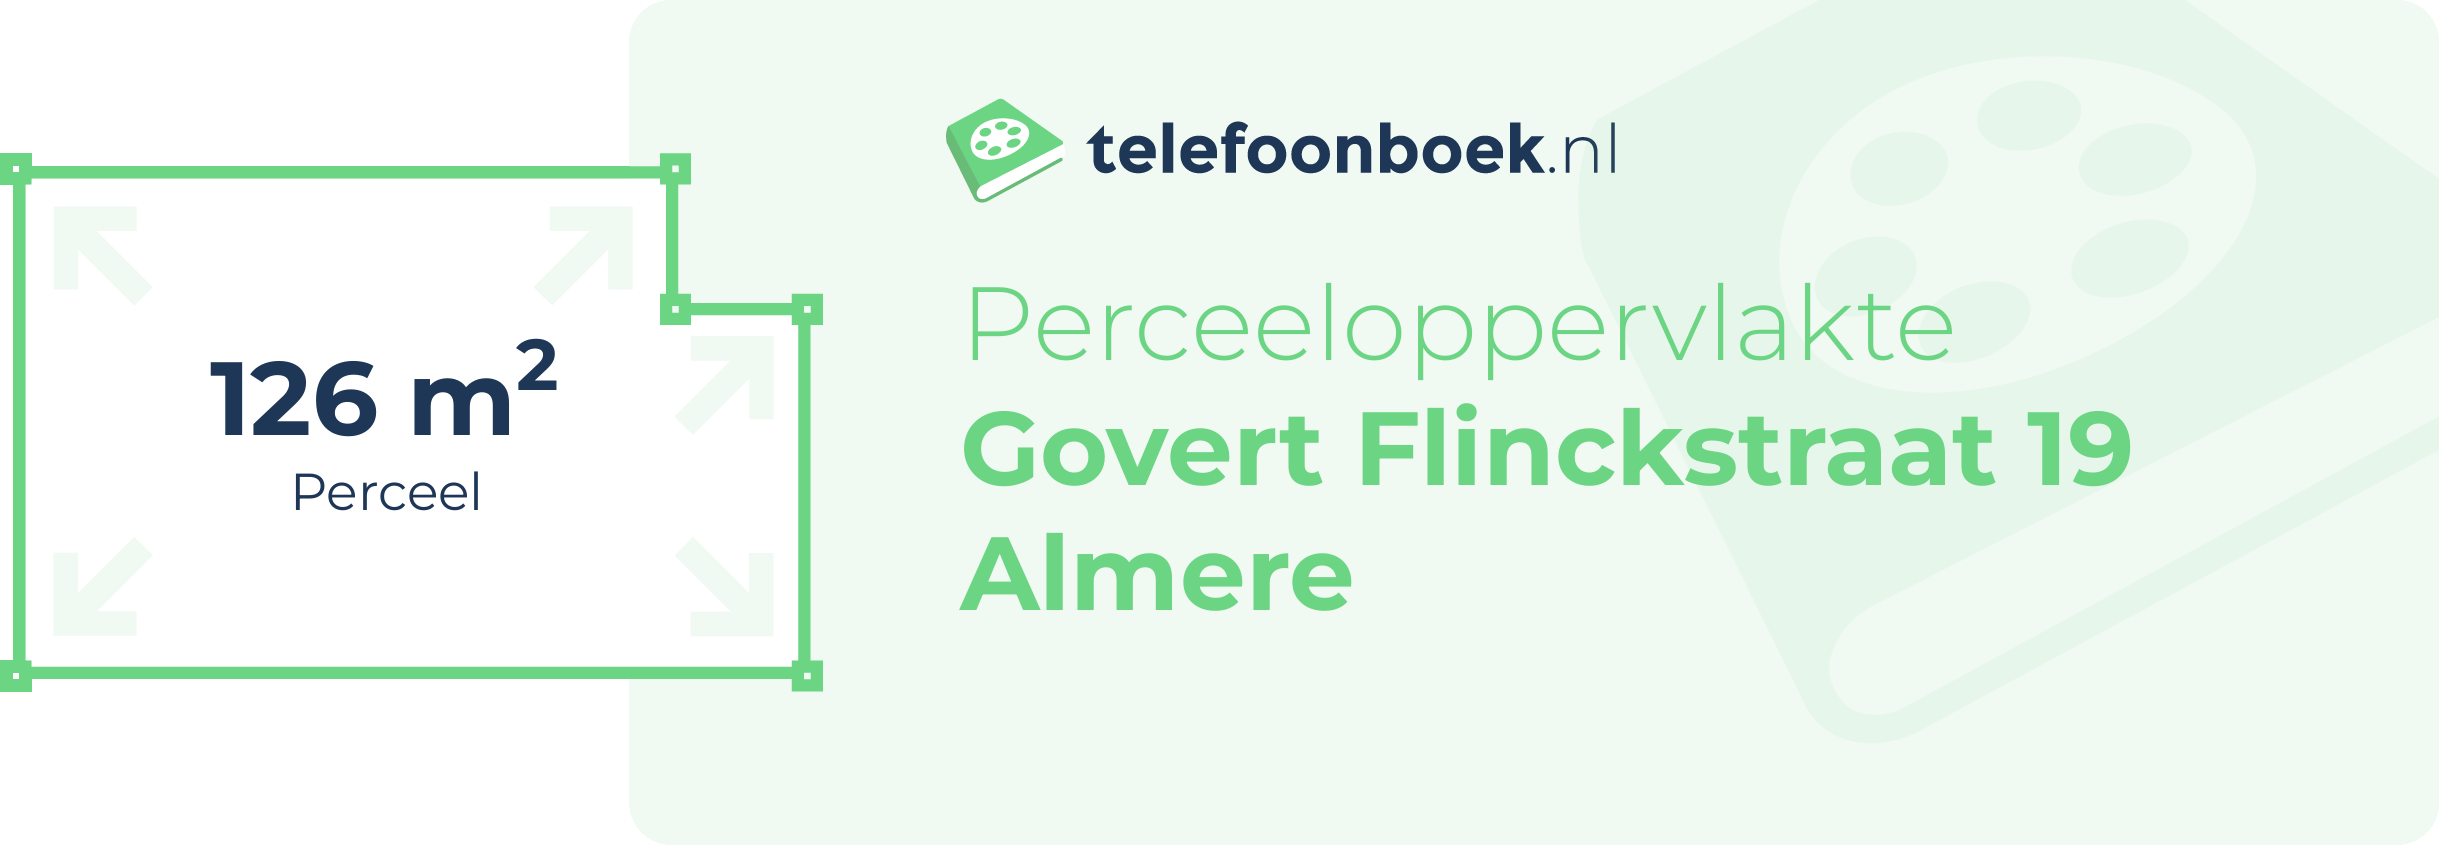 Perceeloppervlakte Govert Flinckstraat 19 Almere